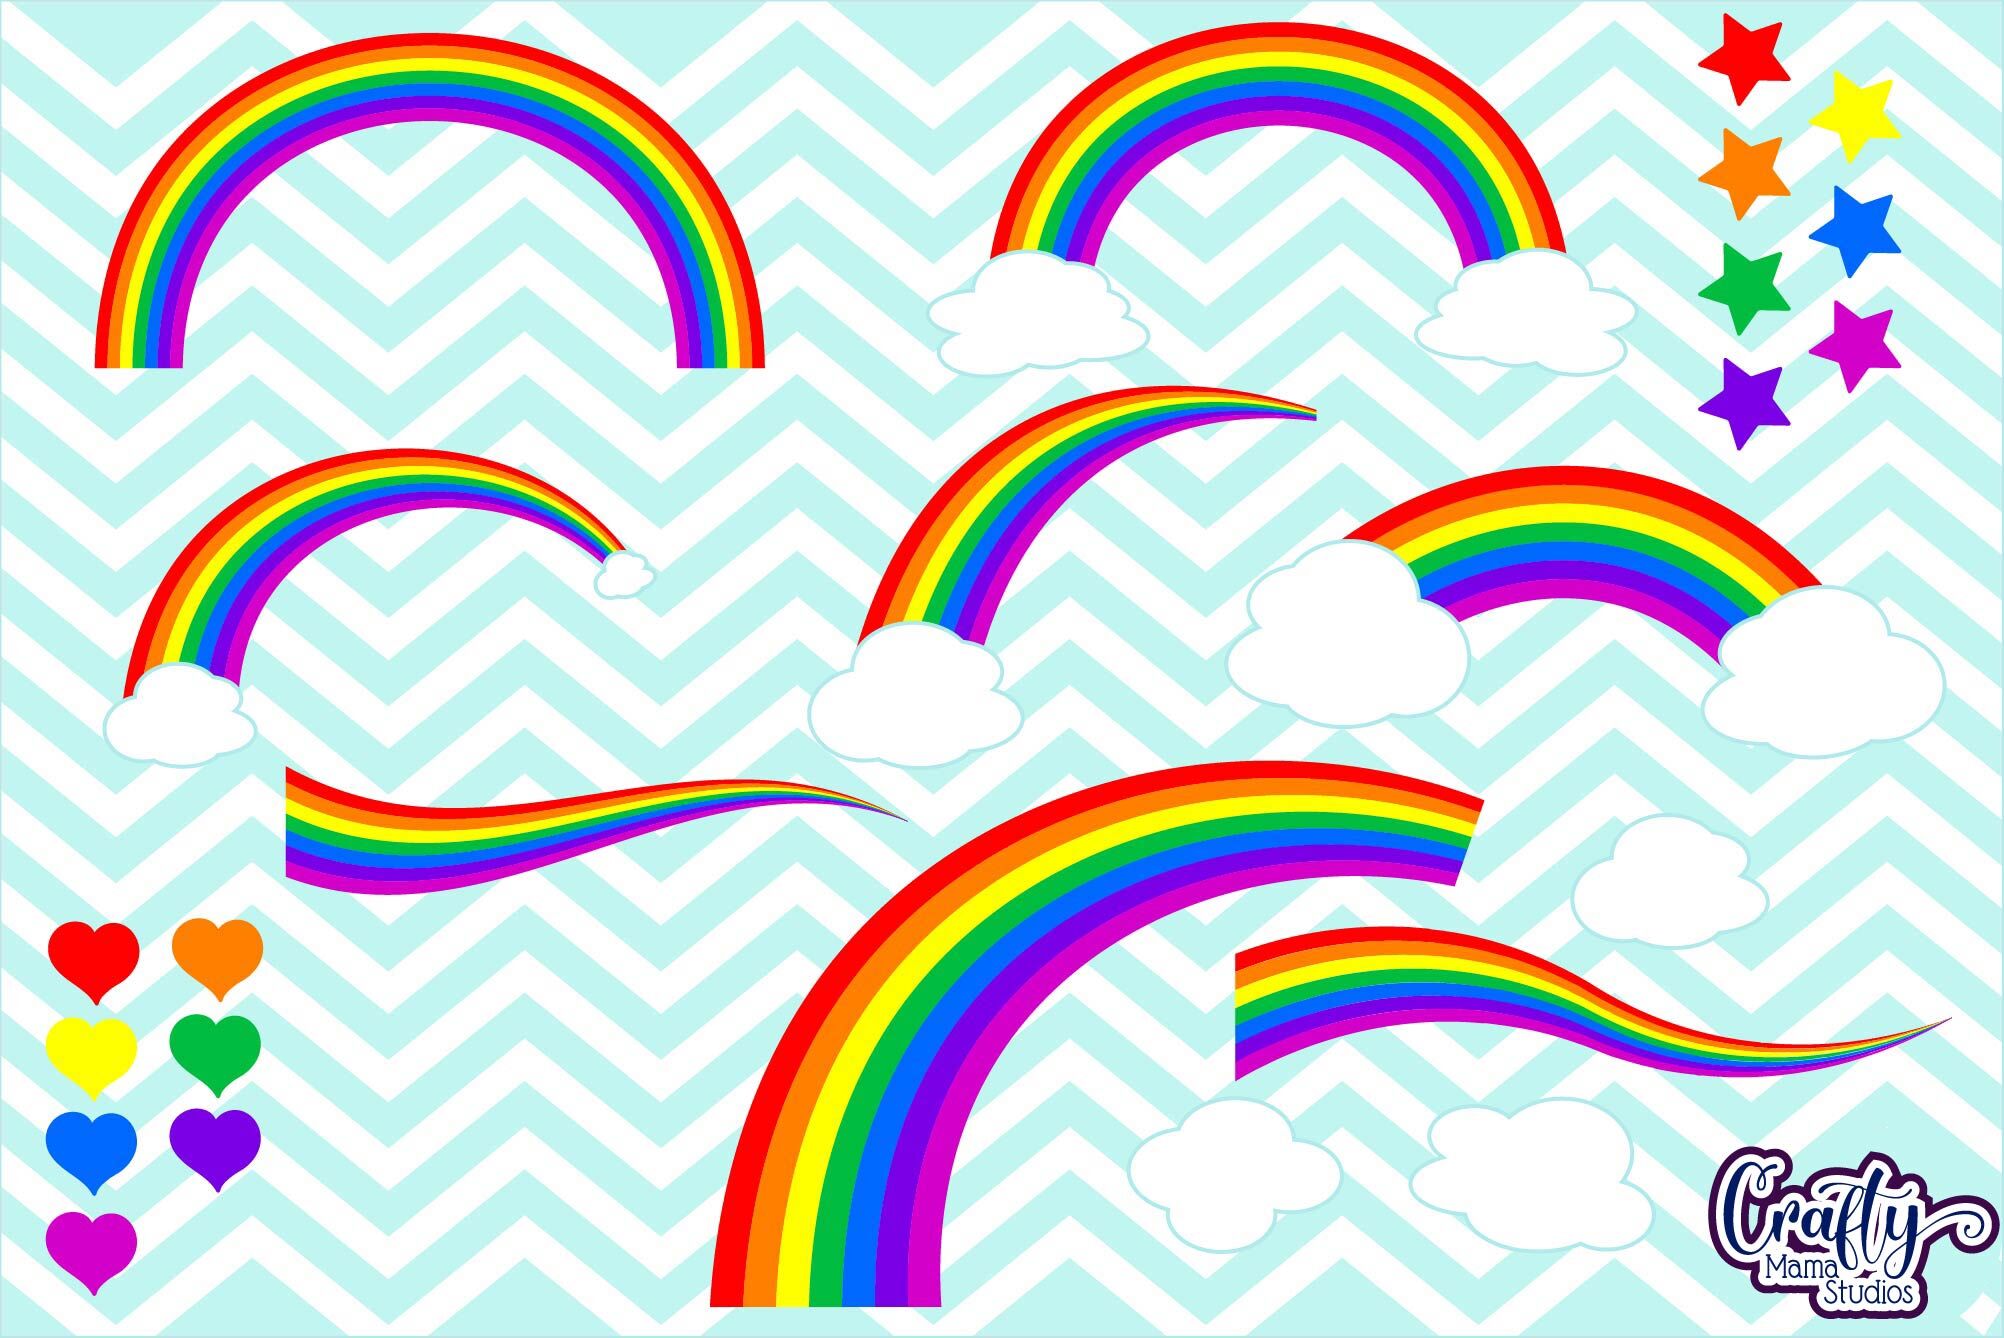 Download Rainbow Svg Rainbow Clipart Heart Cloud Star Clip Art By Crafty Mama Studios Thehungryjpeg Com